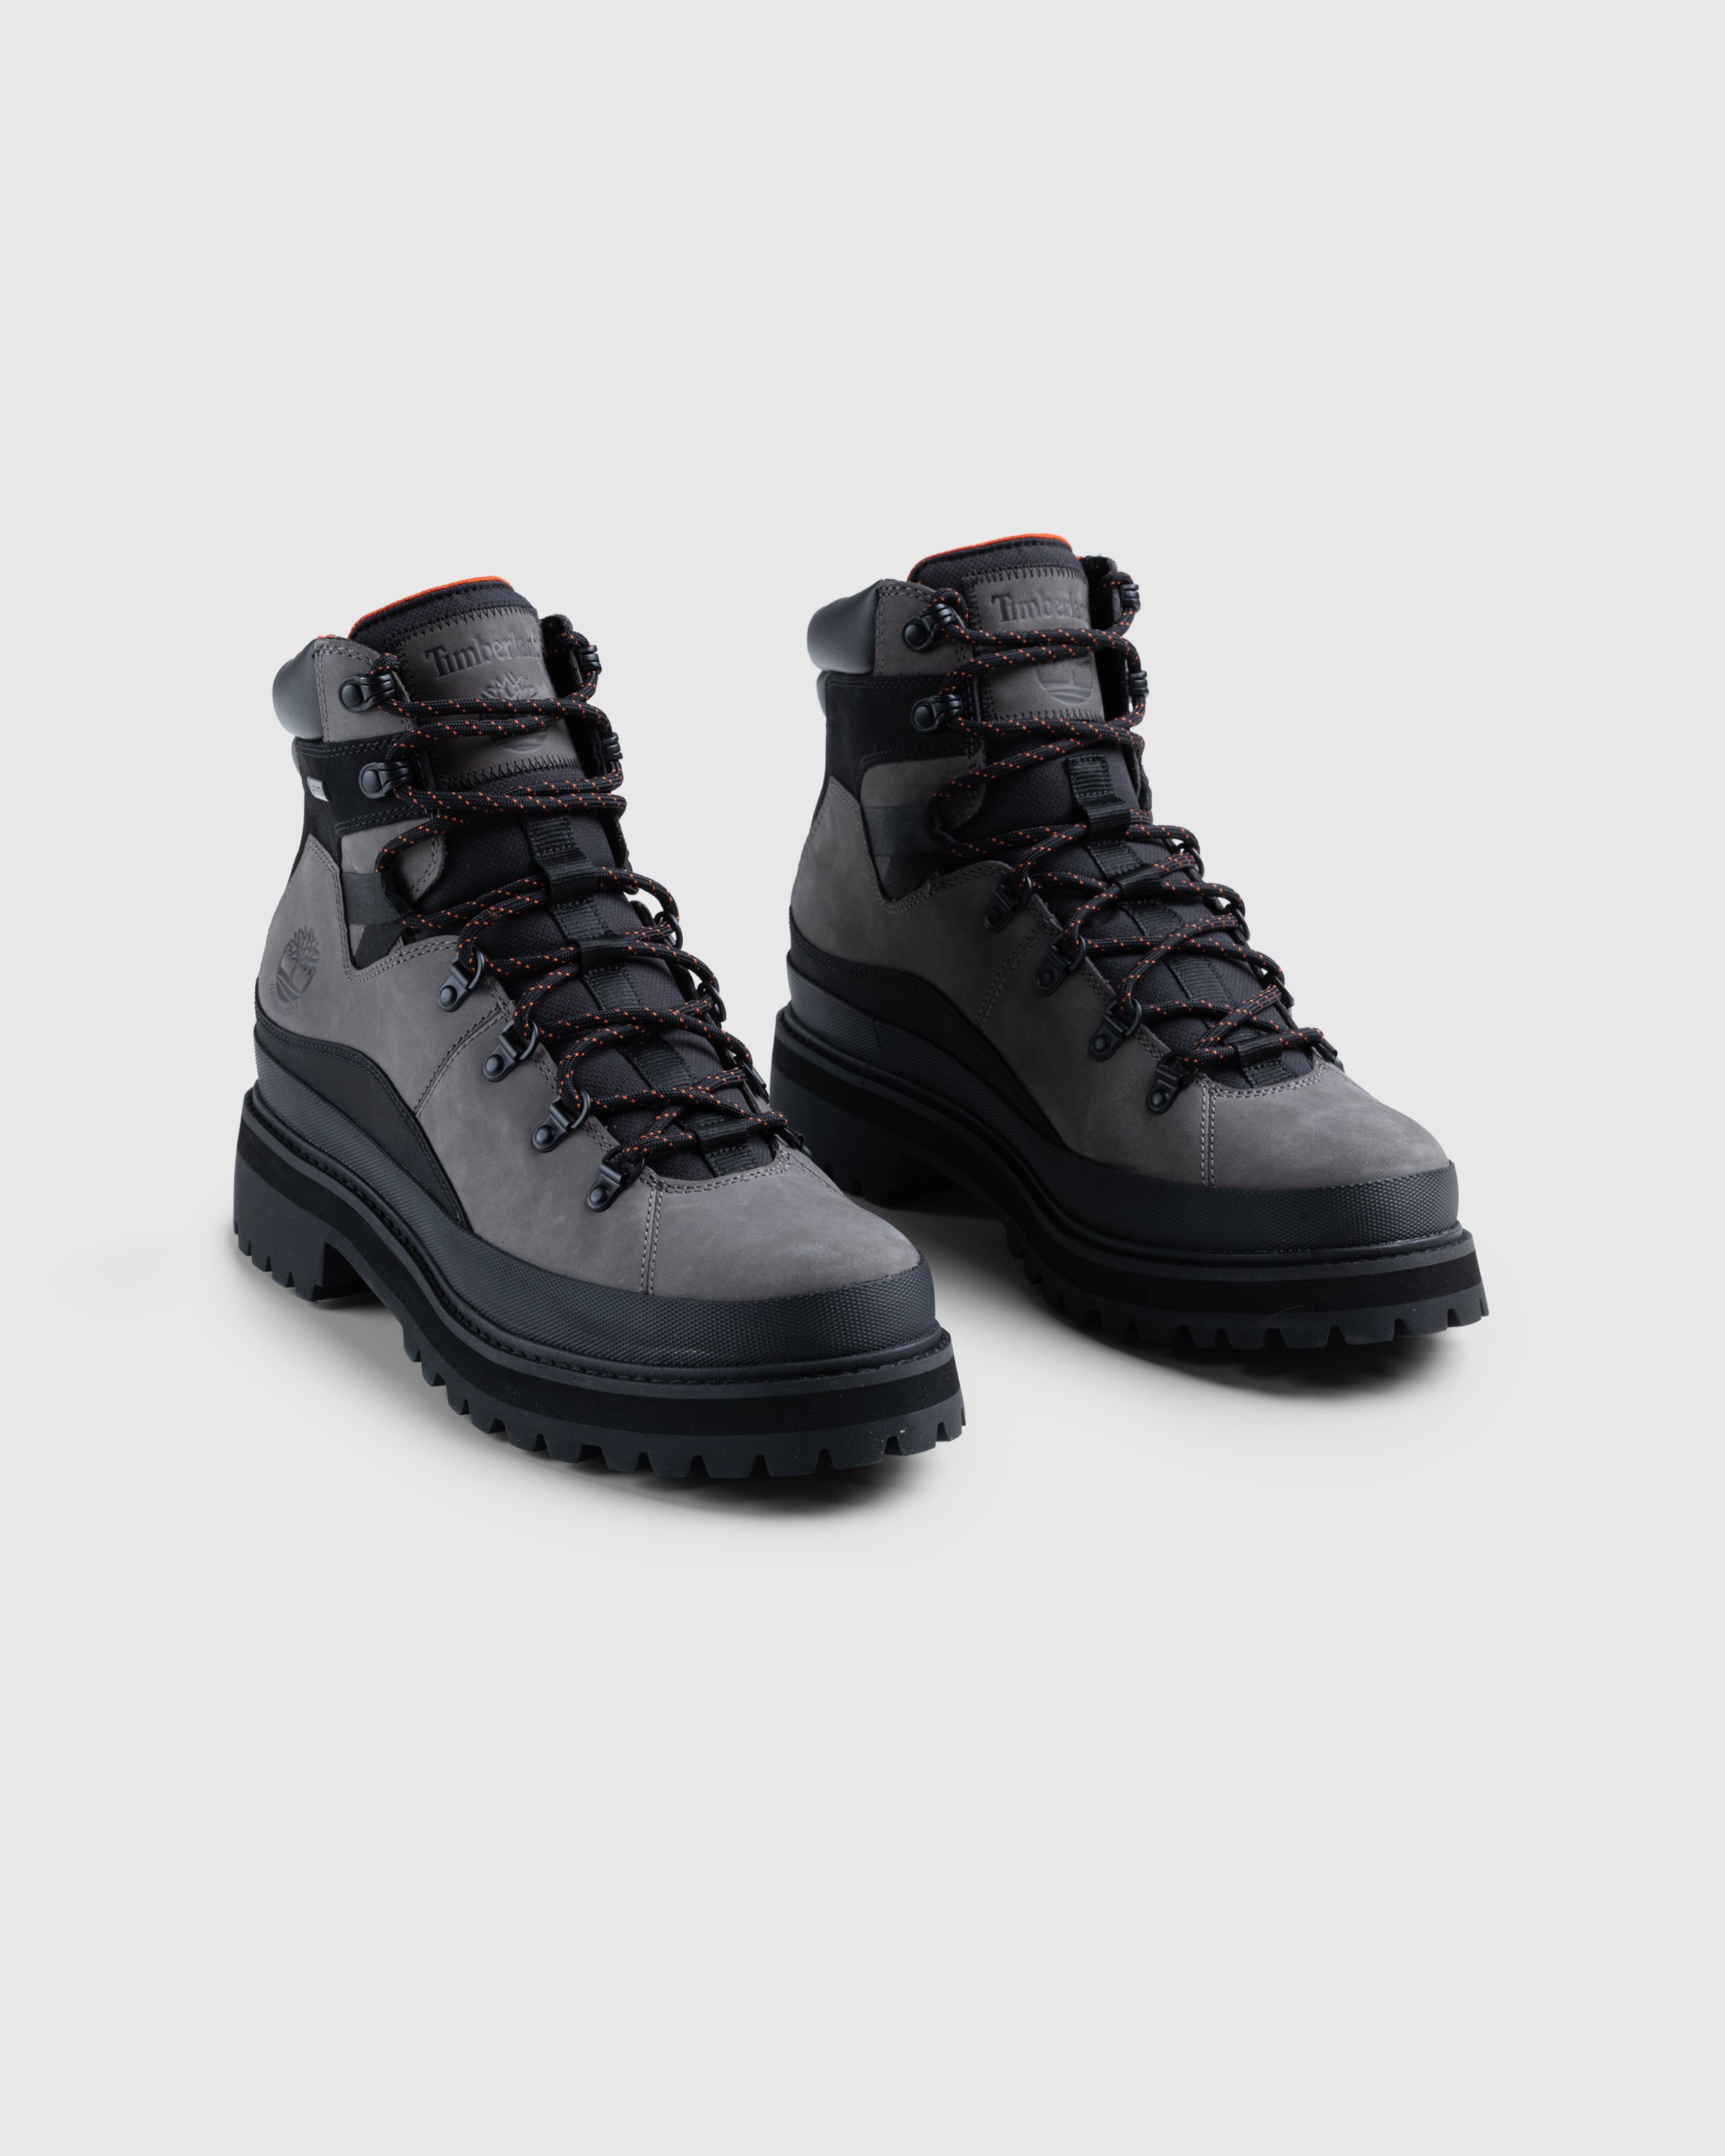 Timberland - MID LACE UP WATERPROOF BOOT CASTLEROCK - Footwear - Grey - Image 3